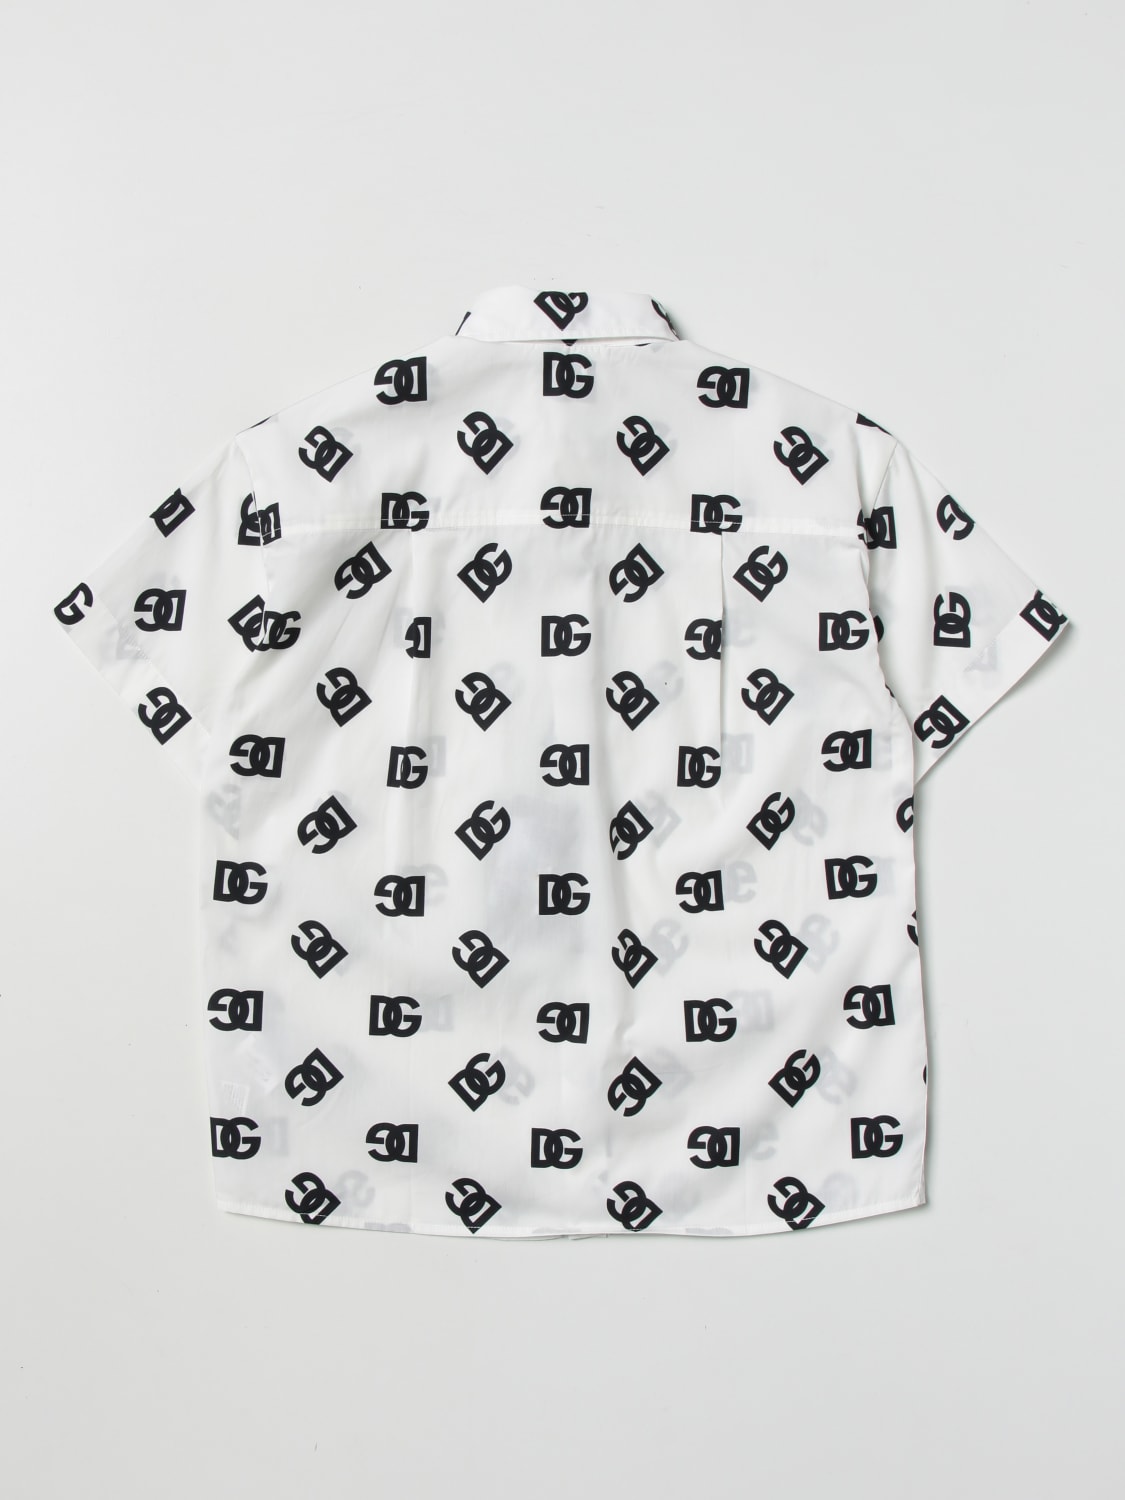 Dolce&Gabbana Black Printed Cotton Shirt